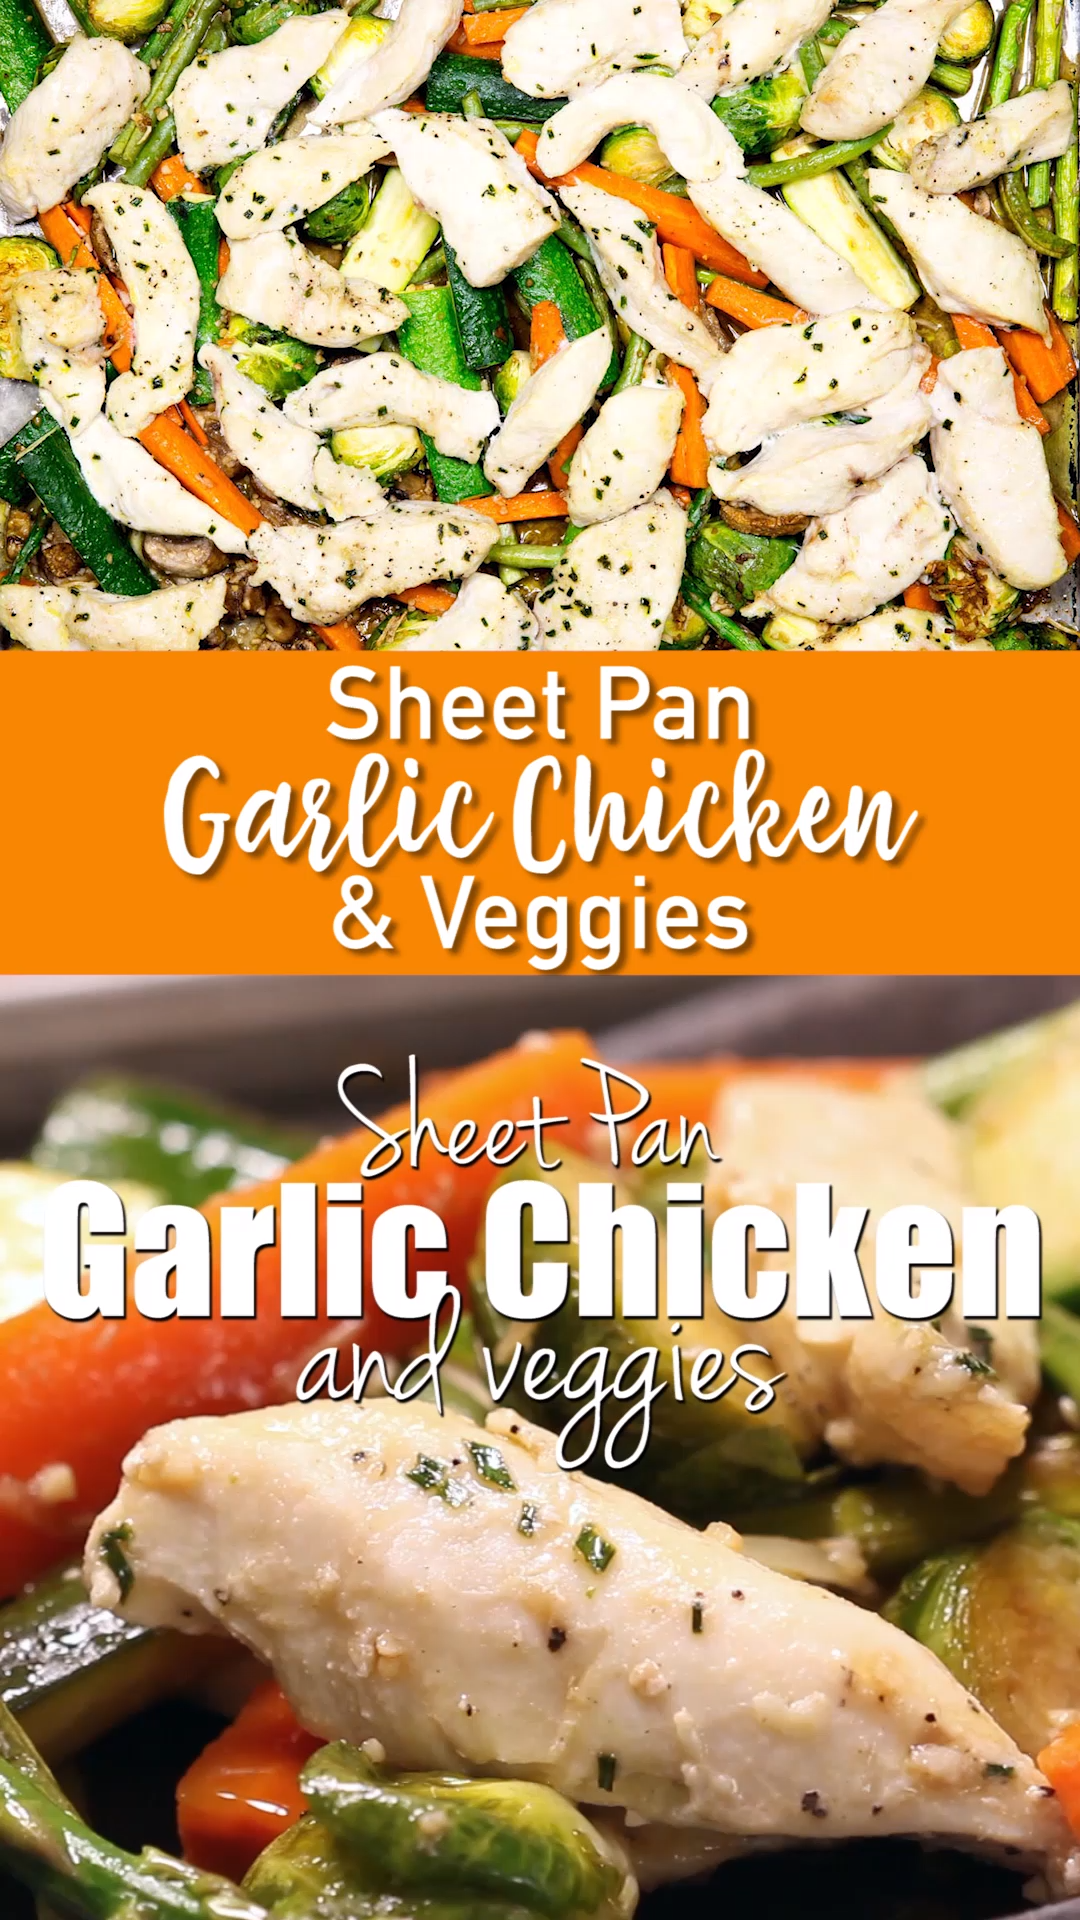 Garlic Chicken and Veggies -   13 healthy recipes For The Week veggies ideas